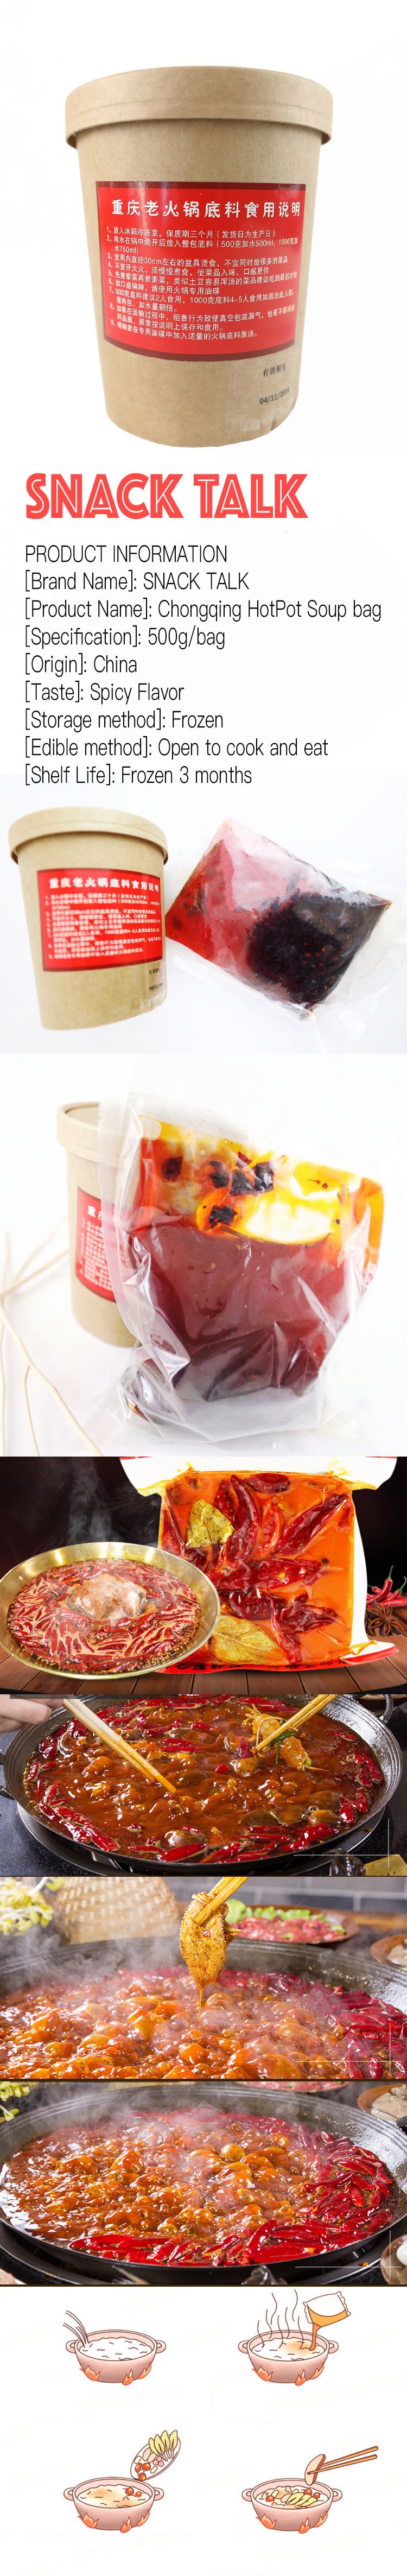 SNACK TALK Chongqing Hotpot Soup Bag 500g